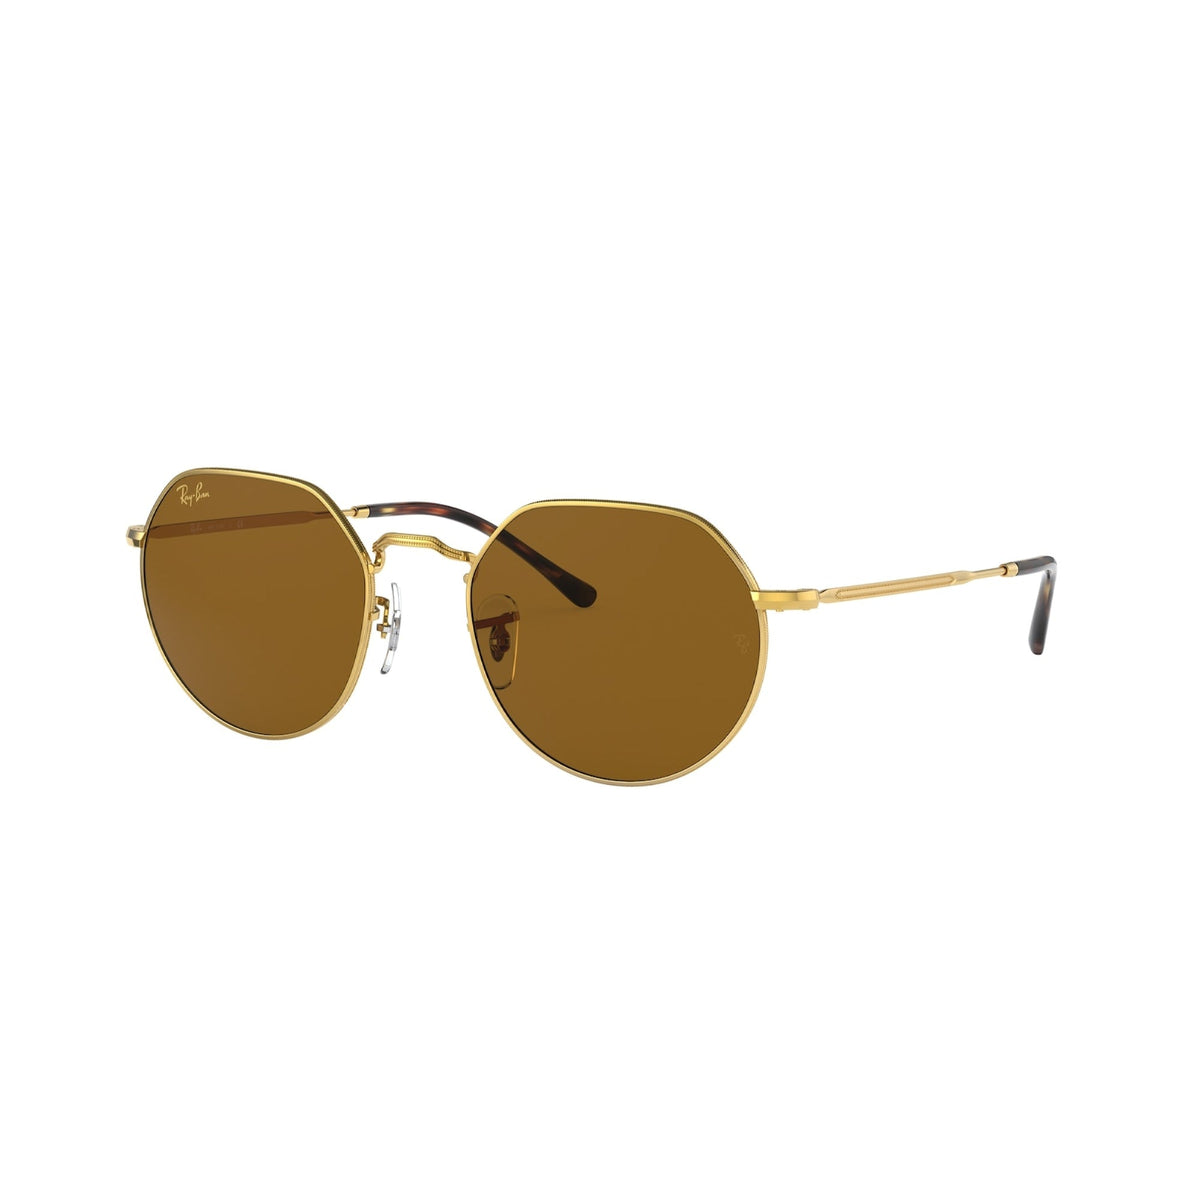 Ray-Ban Unisex Sunglasses Jack Gold Brown Metal Metal  0RB3565 919633 53